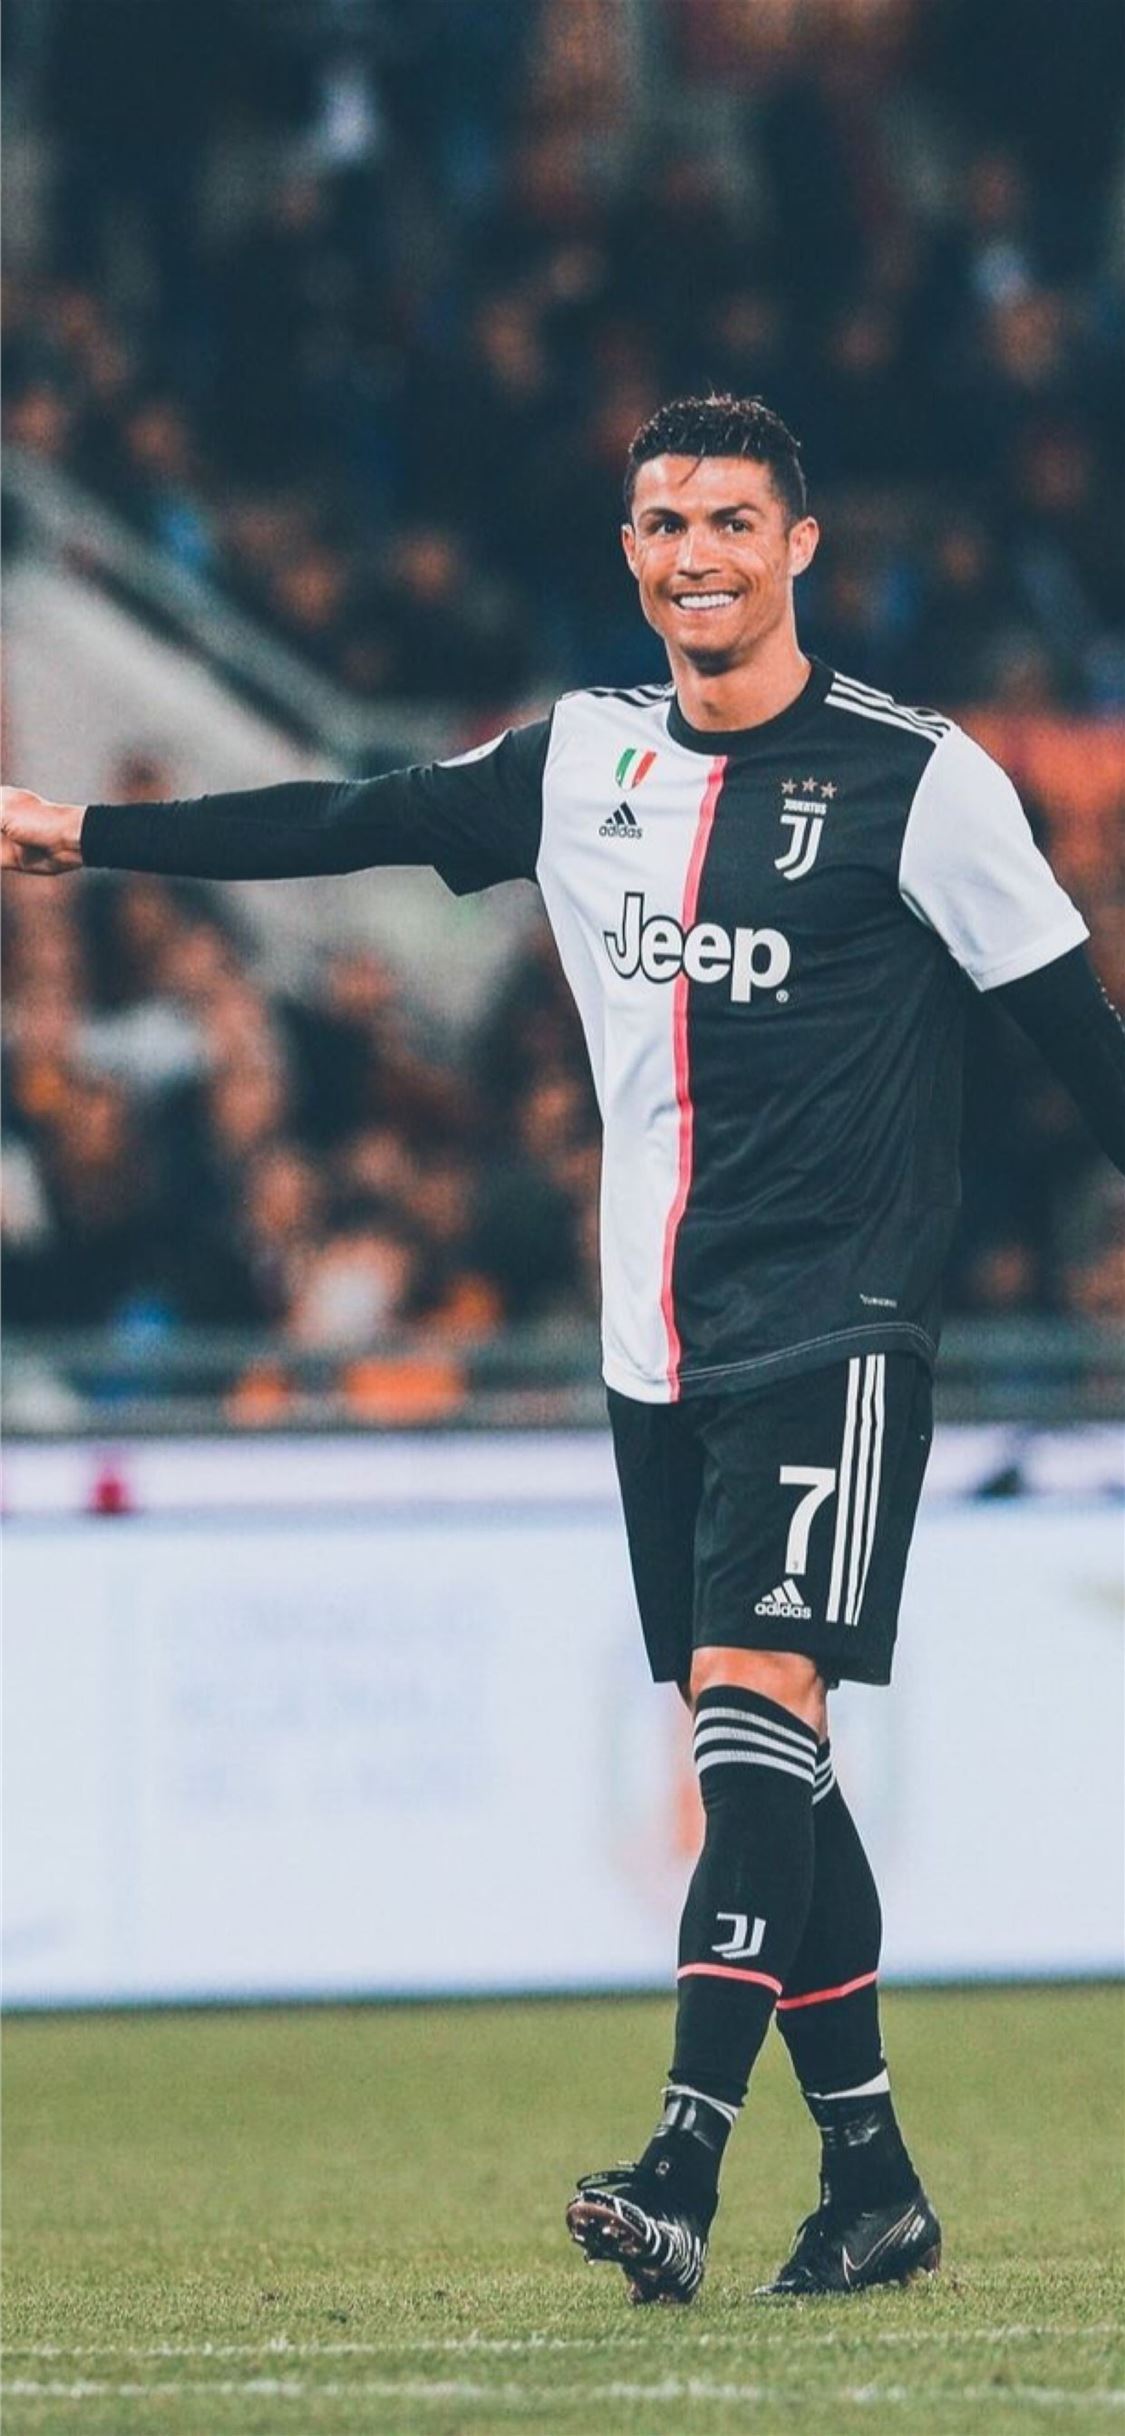 Cristiano Ronaldo Juventus 2019 , HD Wallpaper & Backgrounds